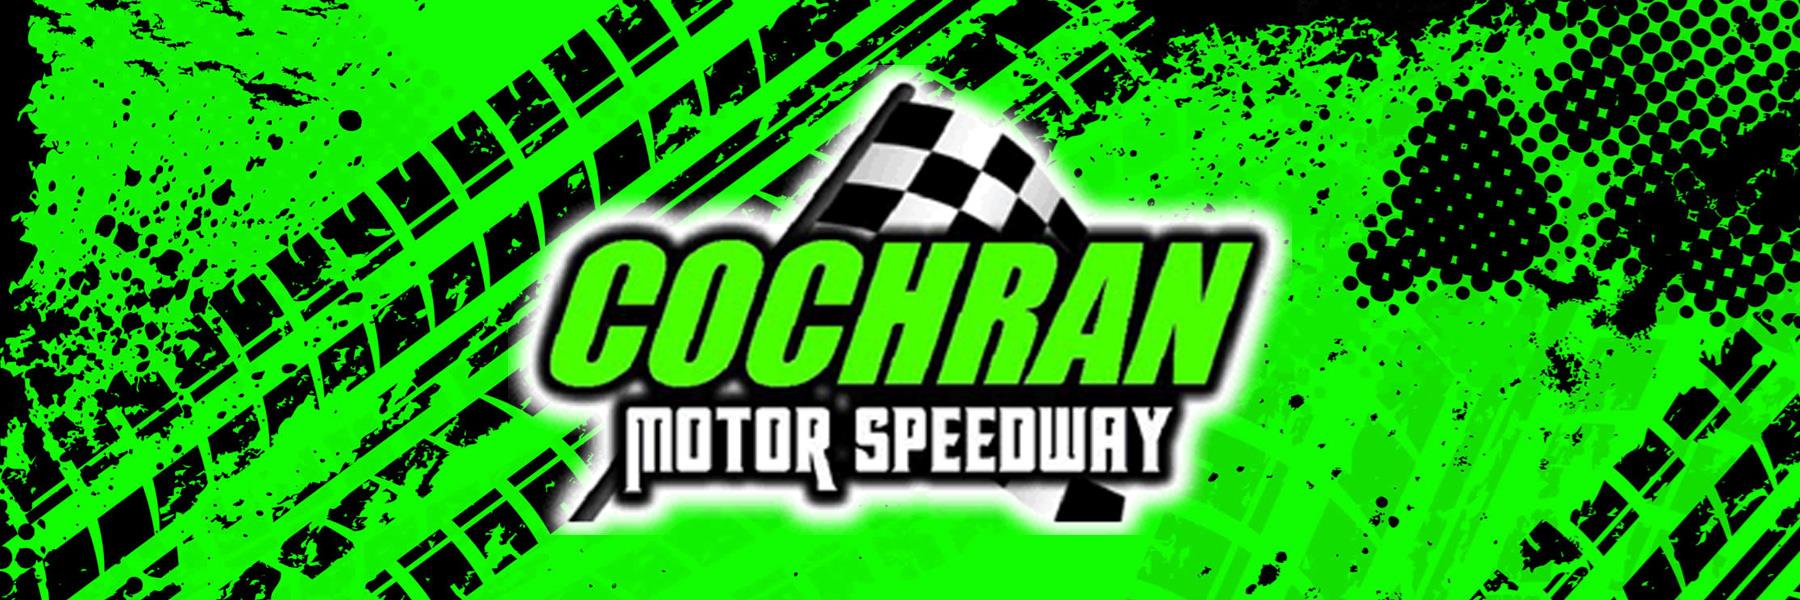 Cochran Motor Speedway